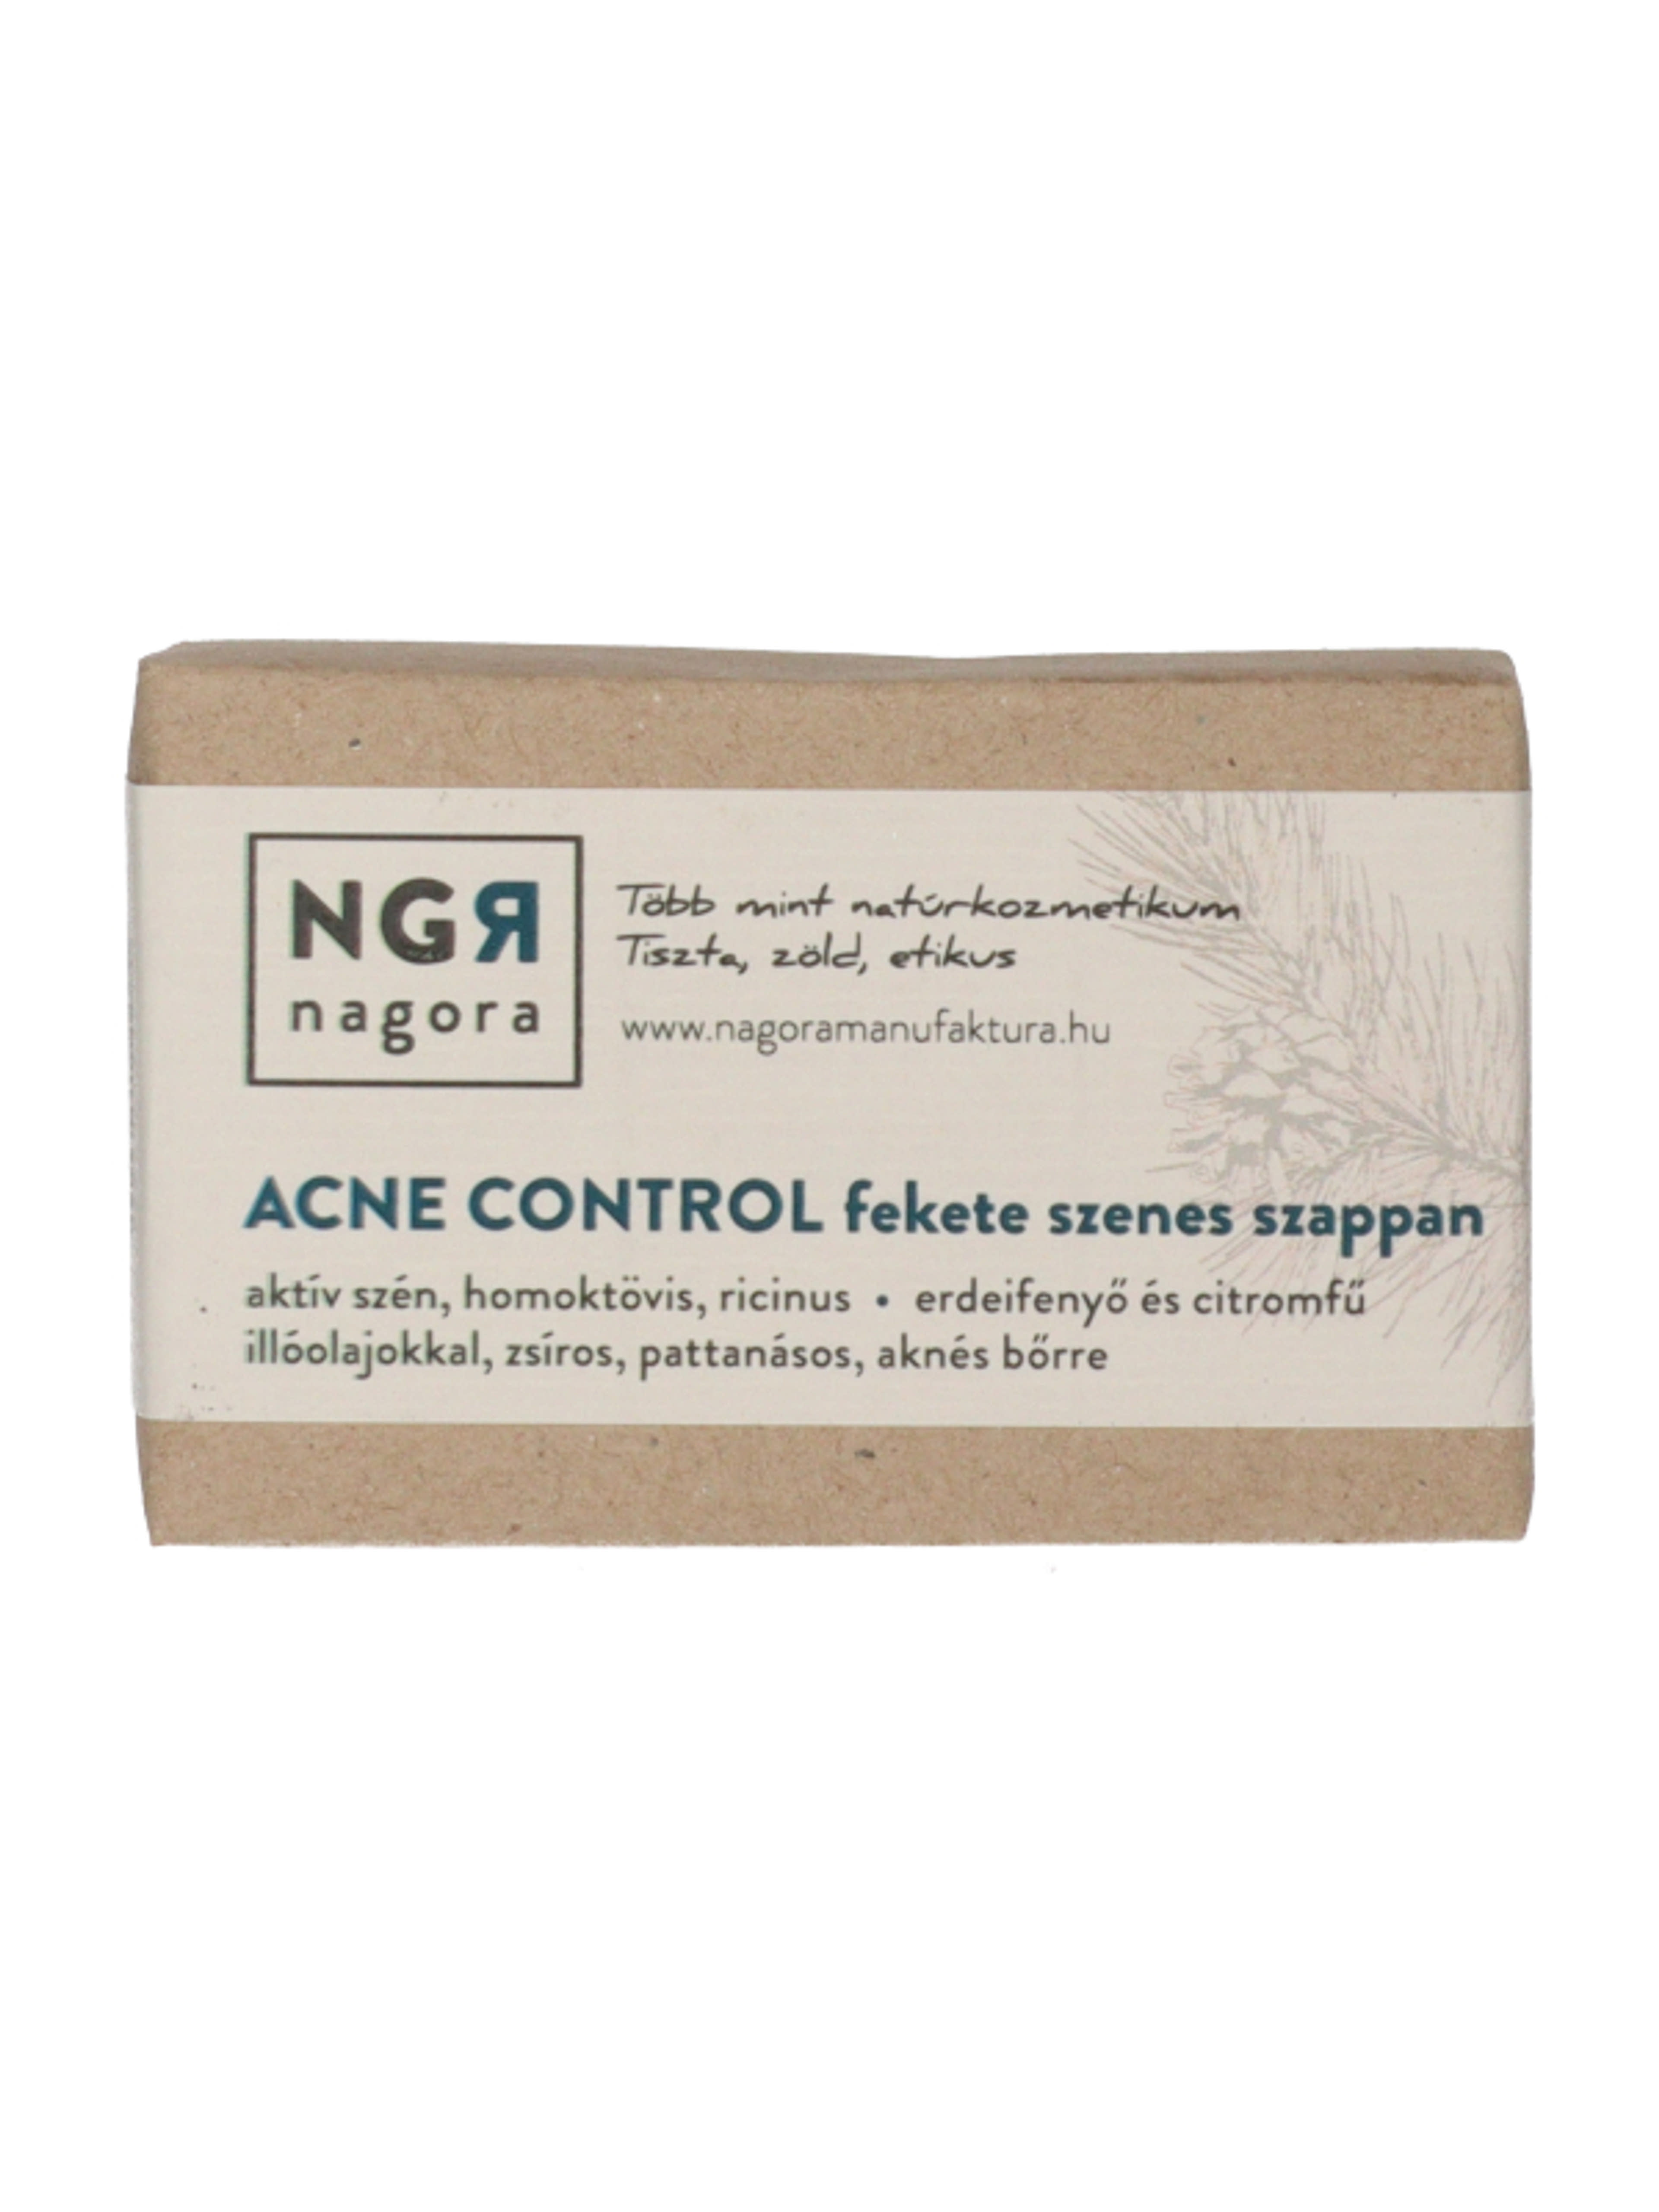 Nagora Acne Control fekete szenes szappan - 90 g